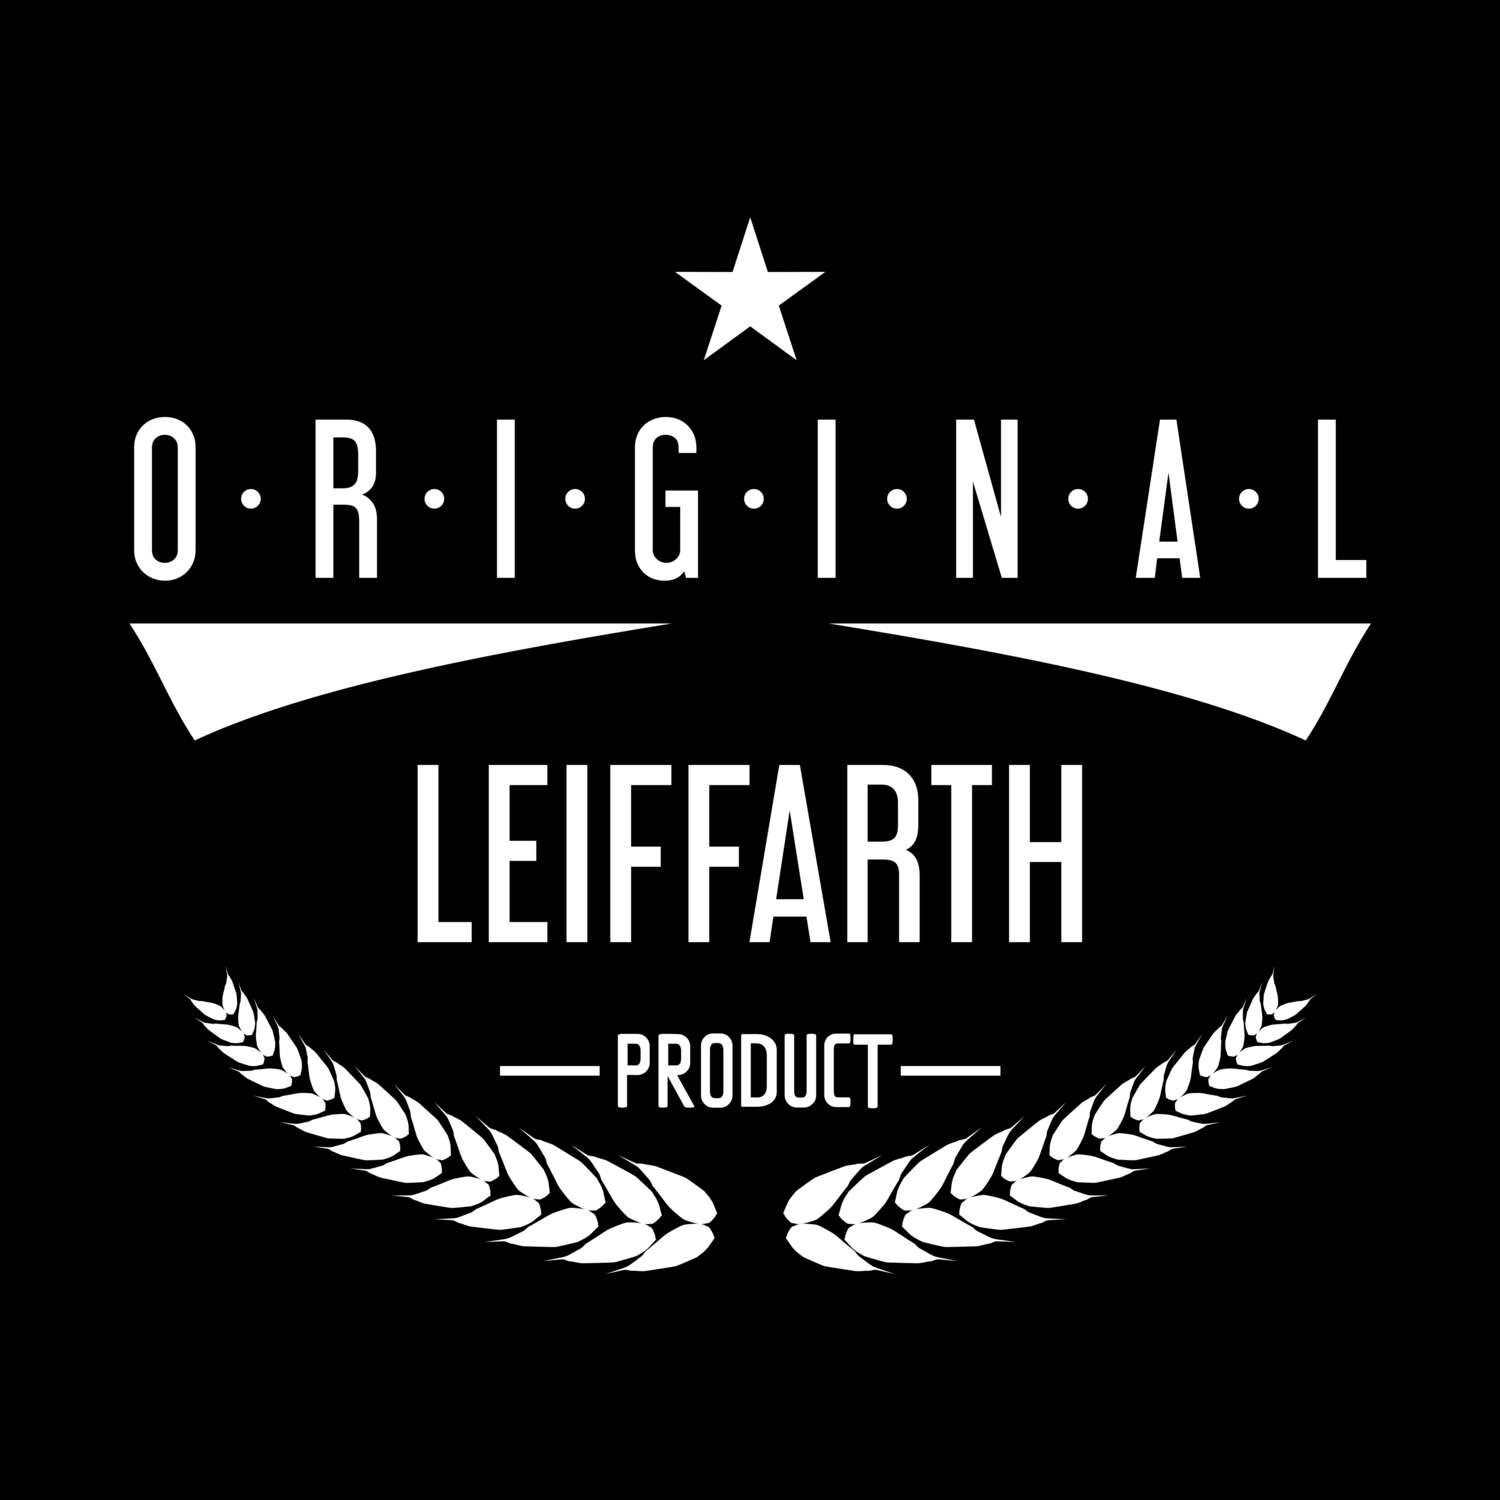 Leiffarth T-Shirt »Original Product«